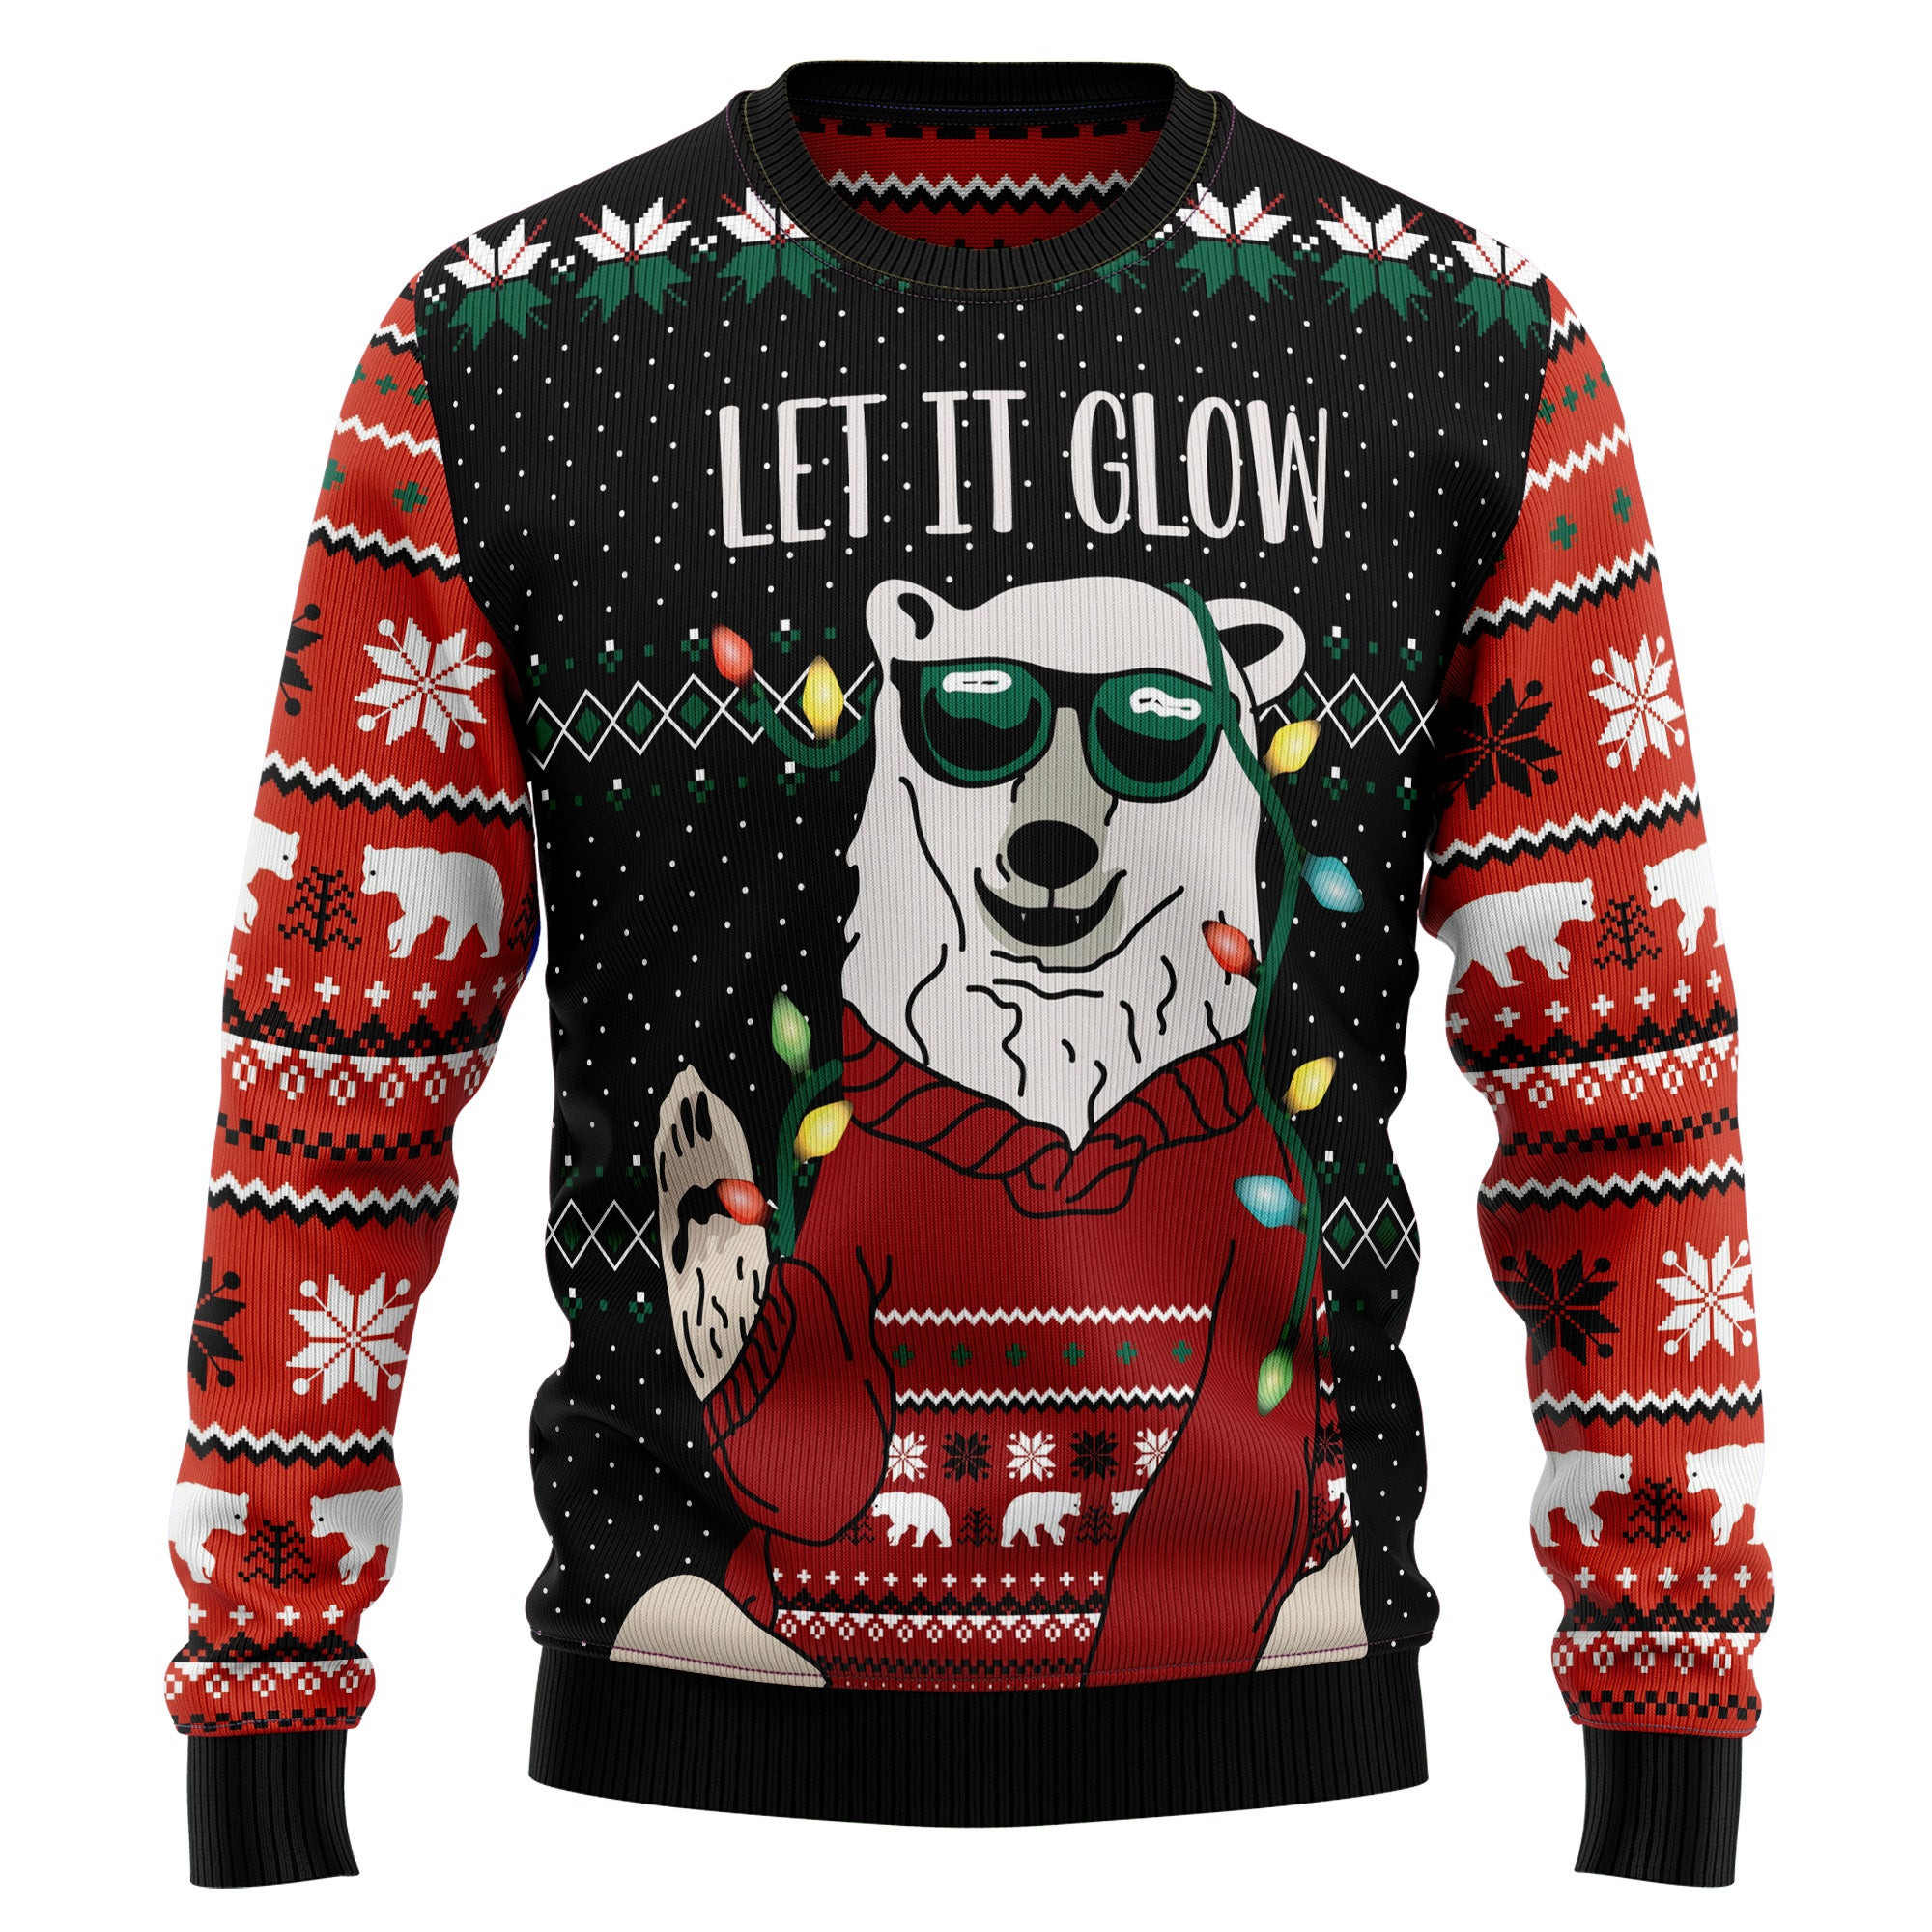 Lets Glow Polar Bear Ugly Christmas Sweater